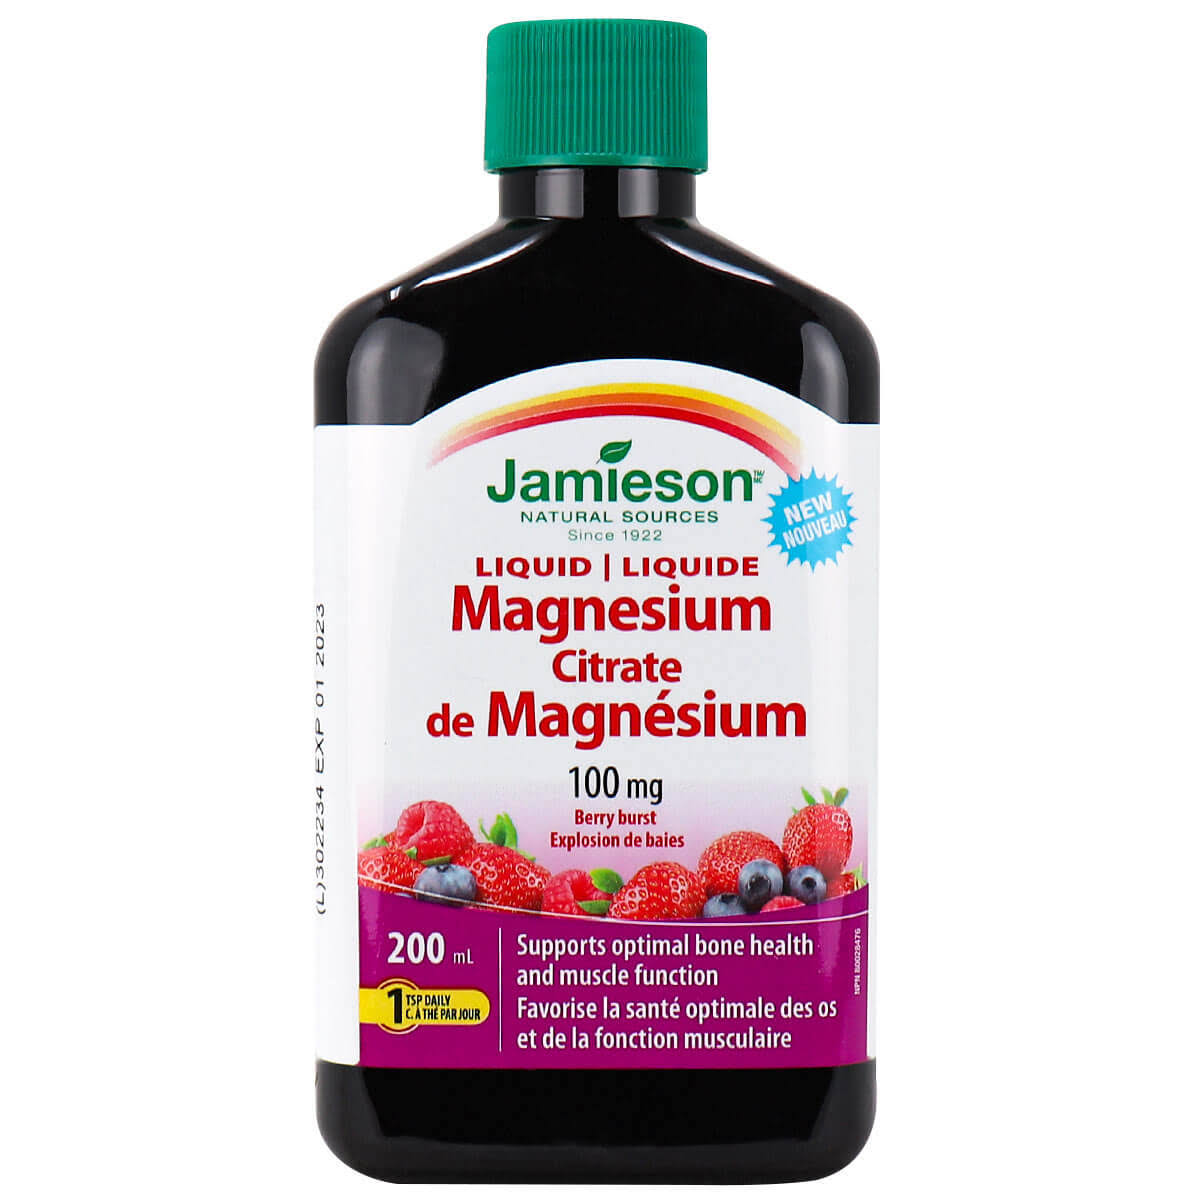 Jamieson Liquid Magnesium Vitamins and Minerals - 200ml